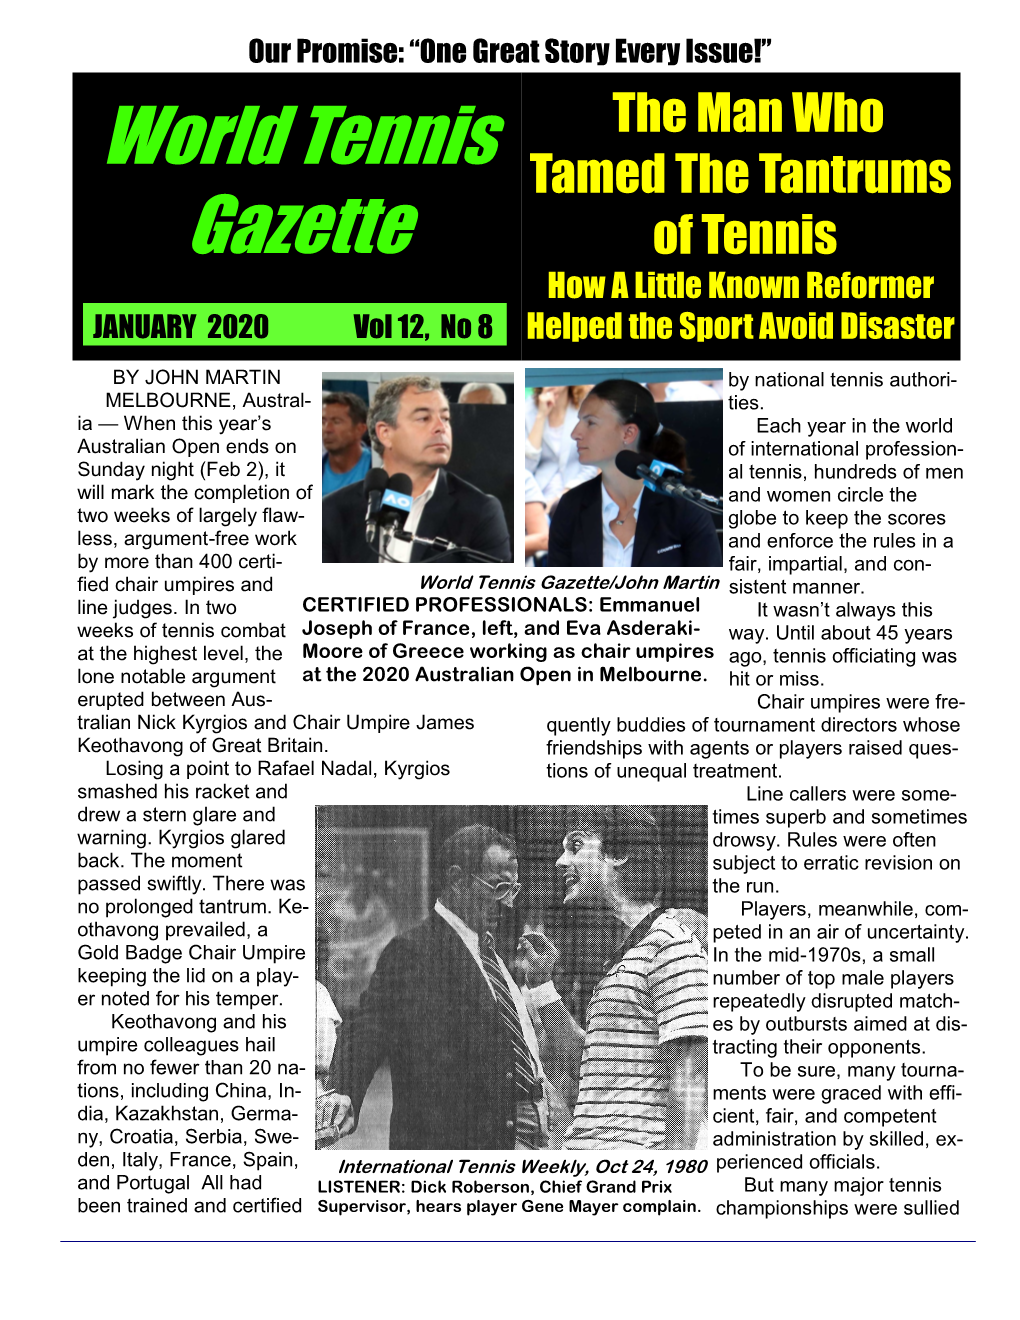 View and Download World Tennis Gazette Vol. 12 No. 8